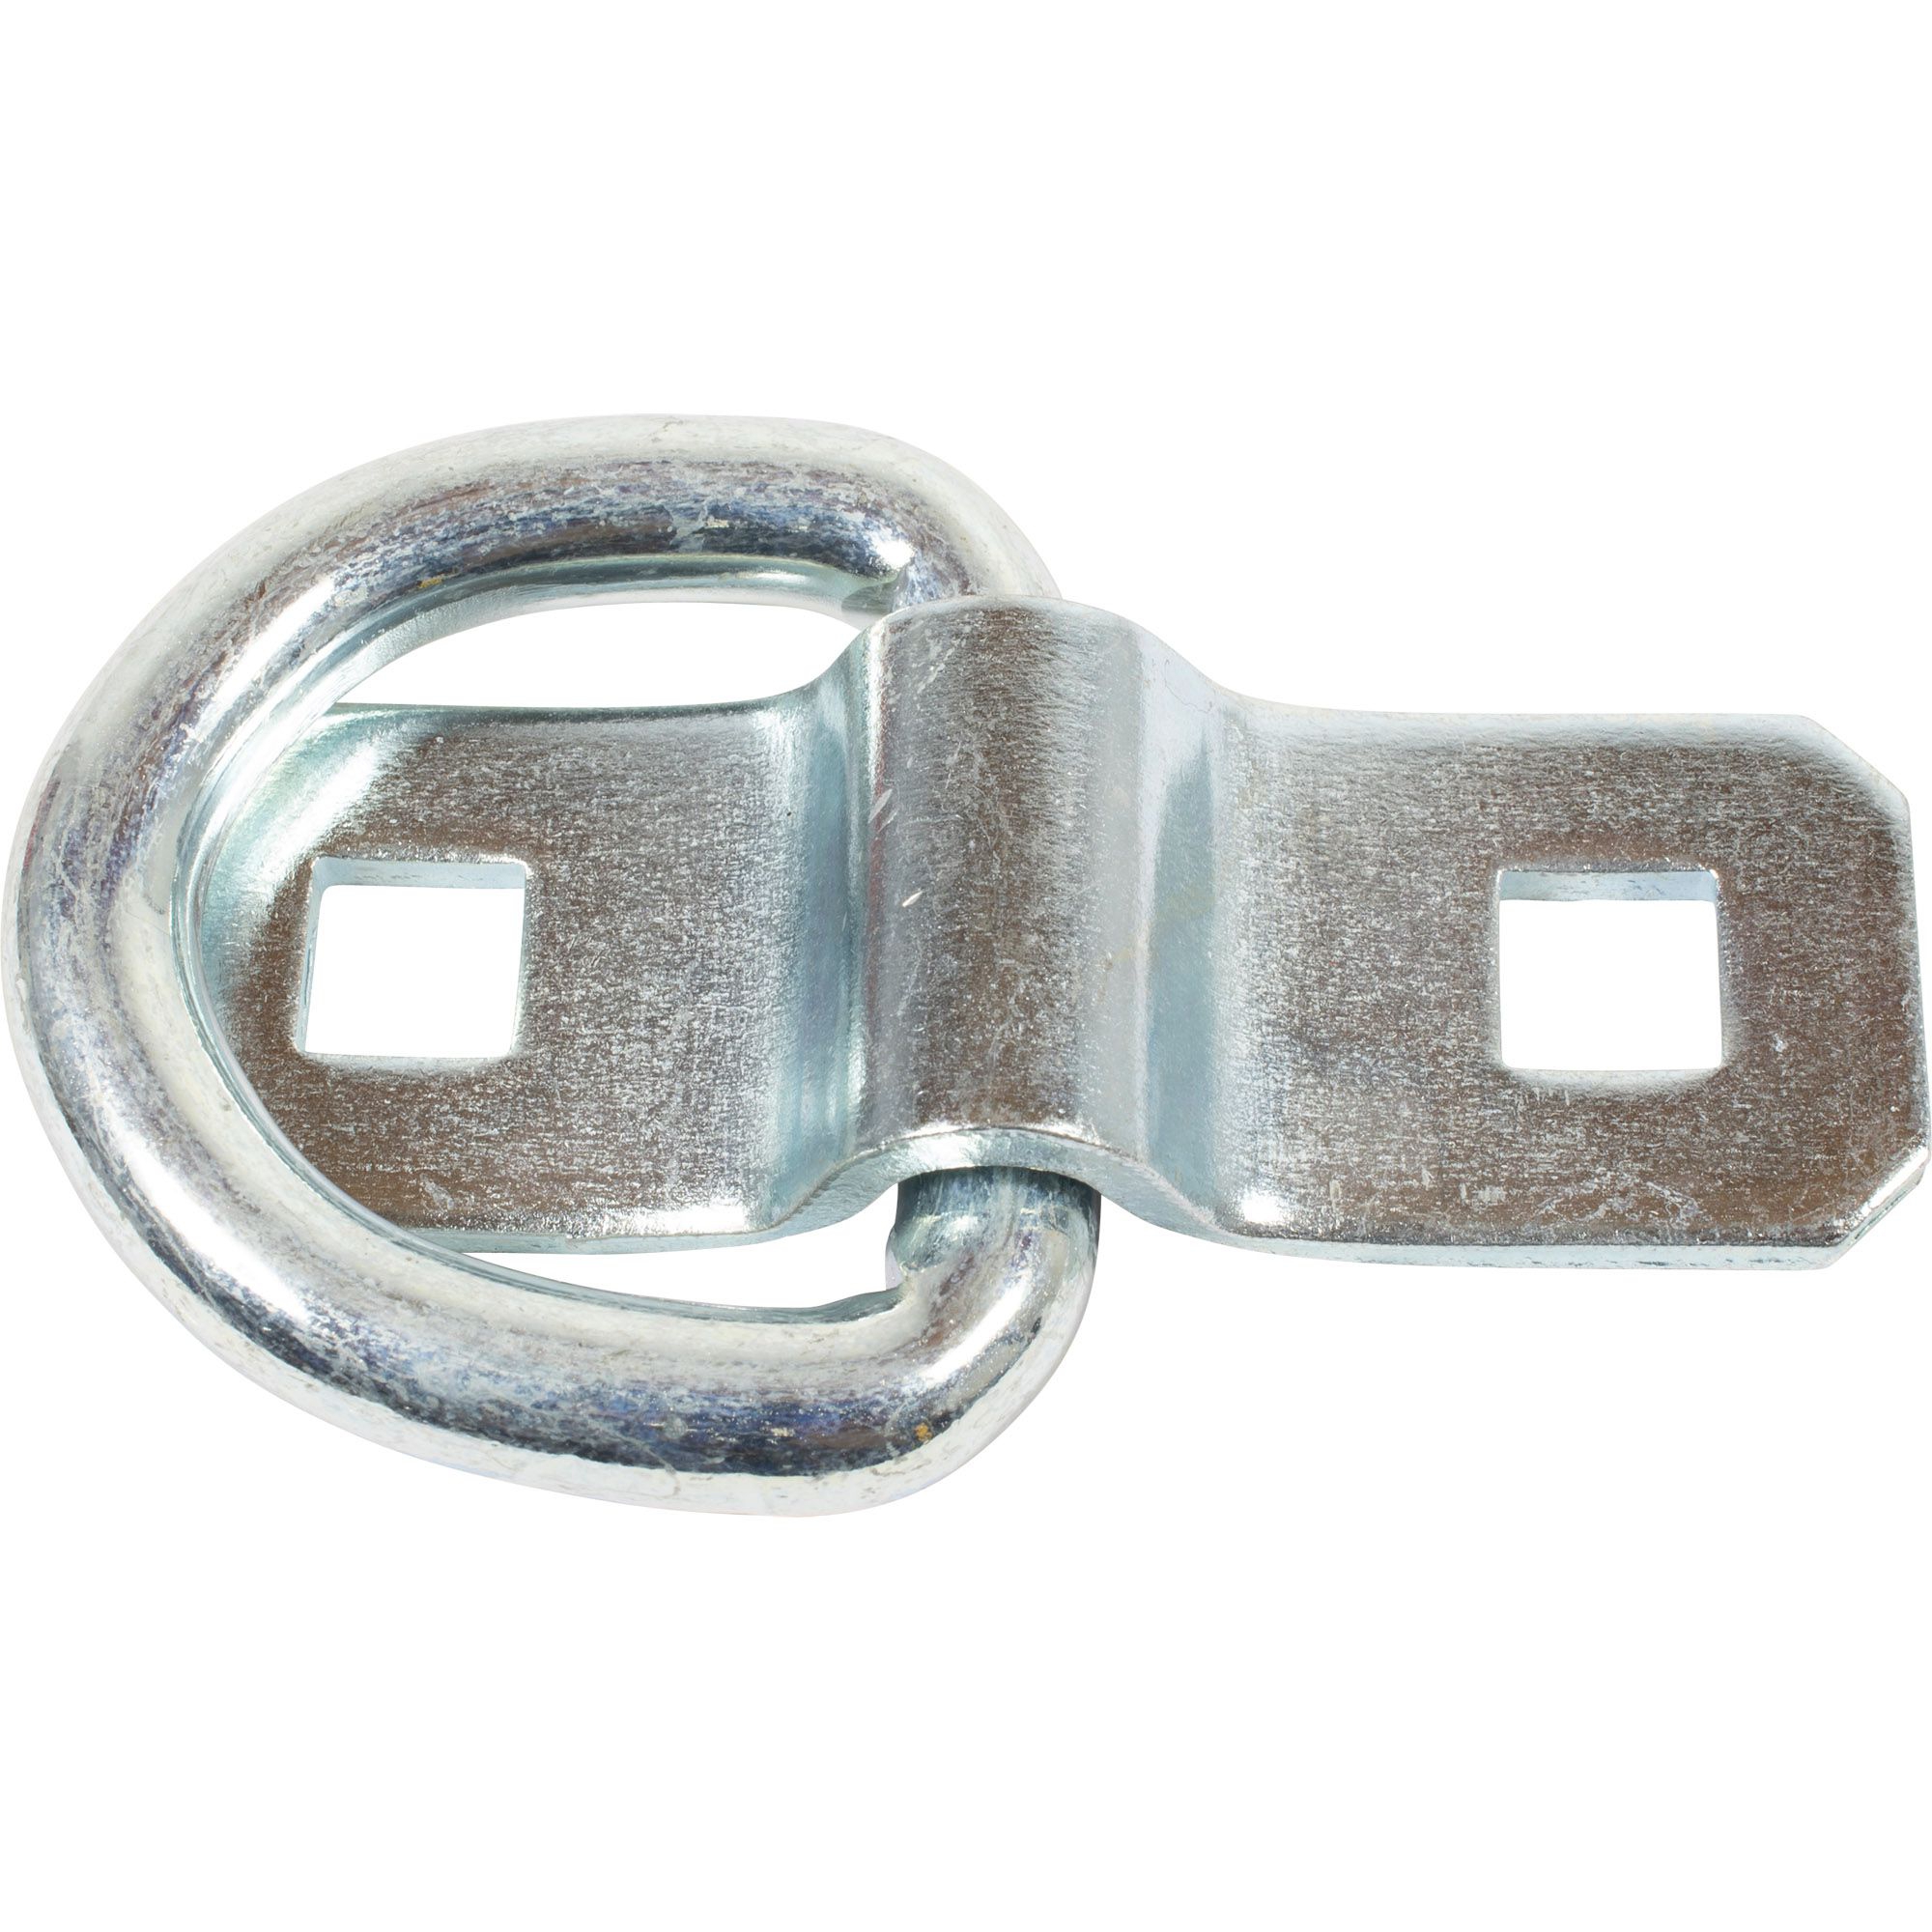 Bügel/Ring für Zurrmulde, Bügel 70 x 25 mm, 400daN